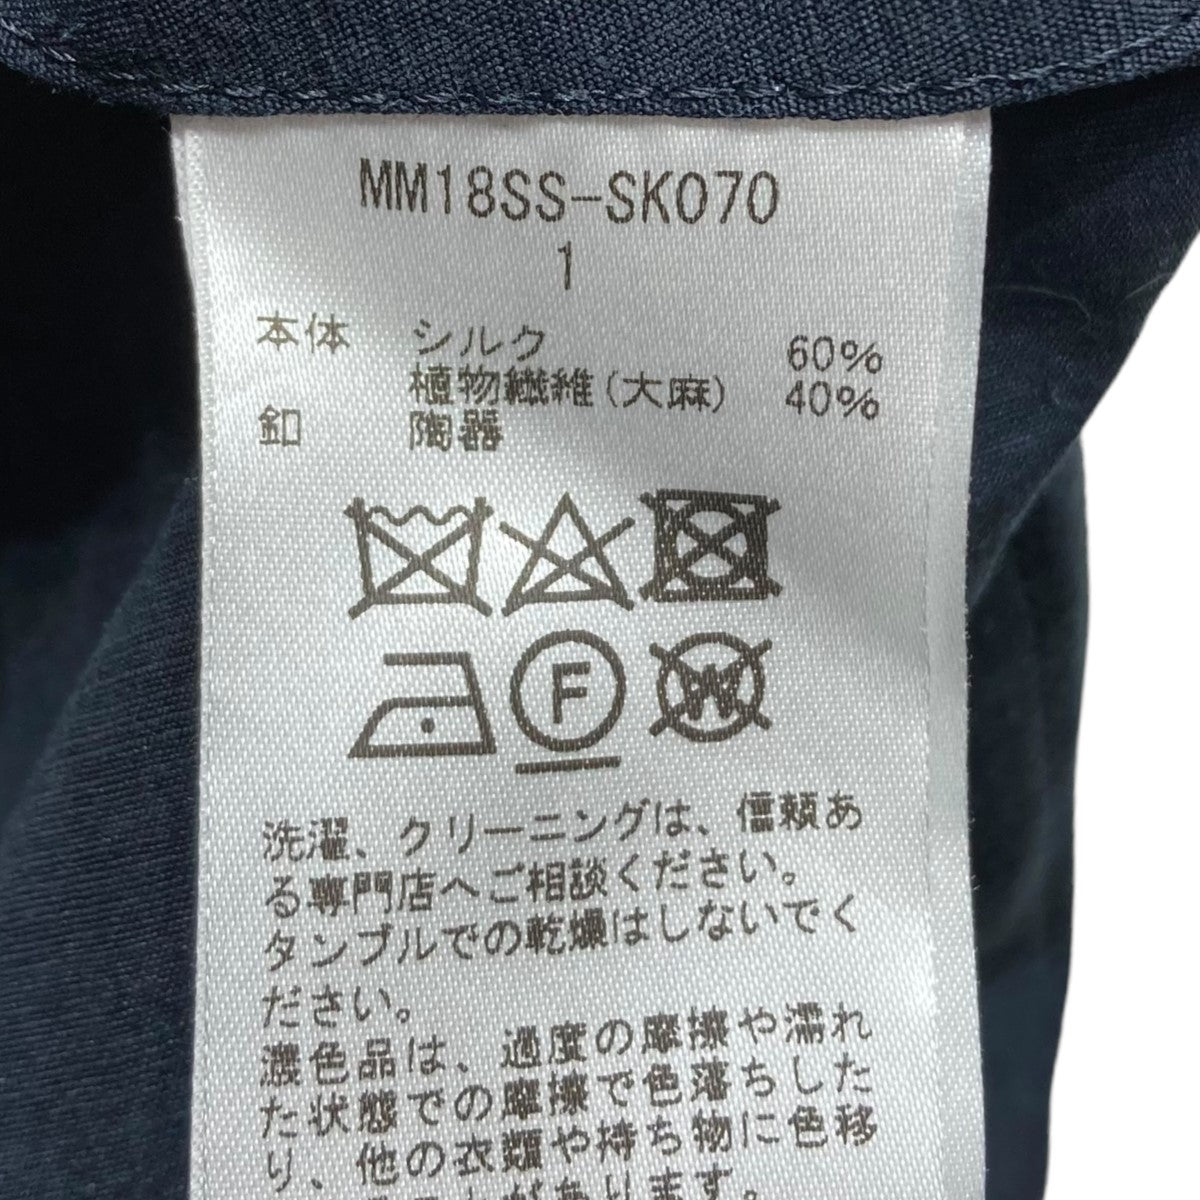 Mame kurogouchi(マメクロゴウチ) Silk HEMP High Waist SkirtシルクヘンプハイウエストスカートMM18SS-SK070 ネイビー サイズ:1 レディース ワンピース 中古・古着